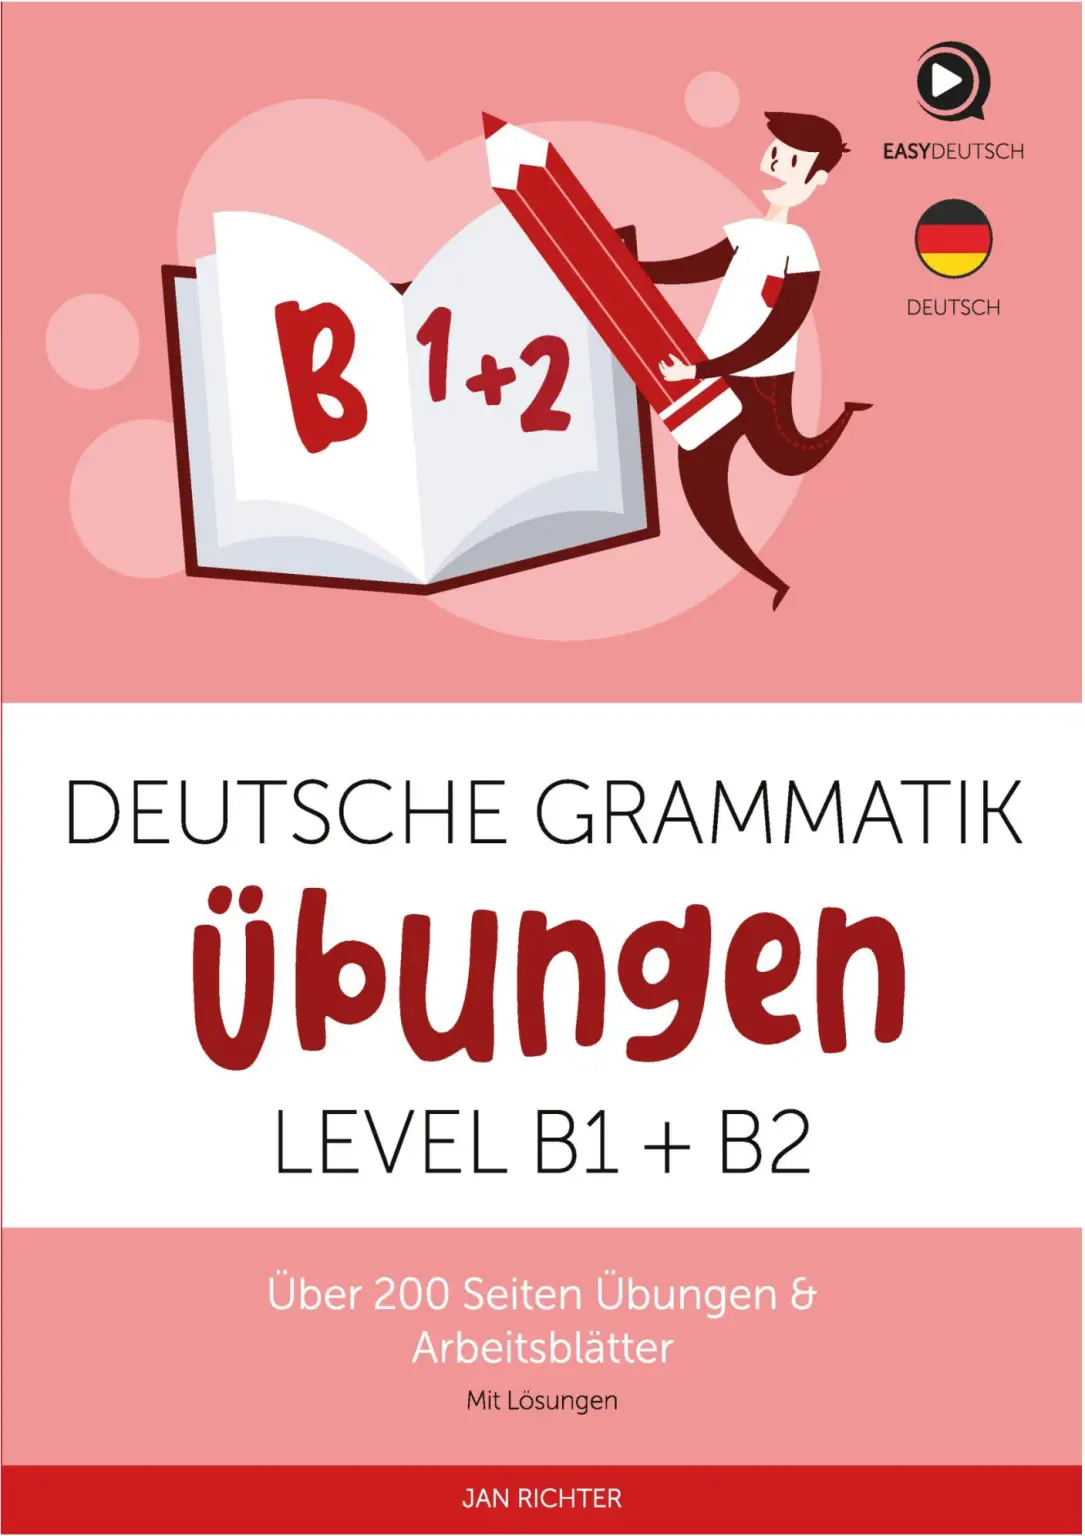 Rich Results on Google's SERP when searching for ''Deutsche-Grammatik-Ubungen-Level-B1+B2''